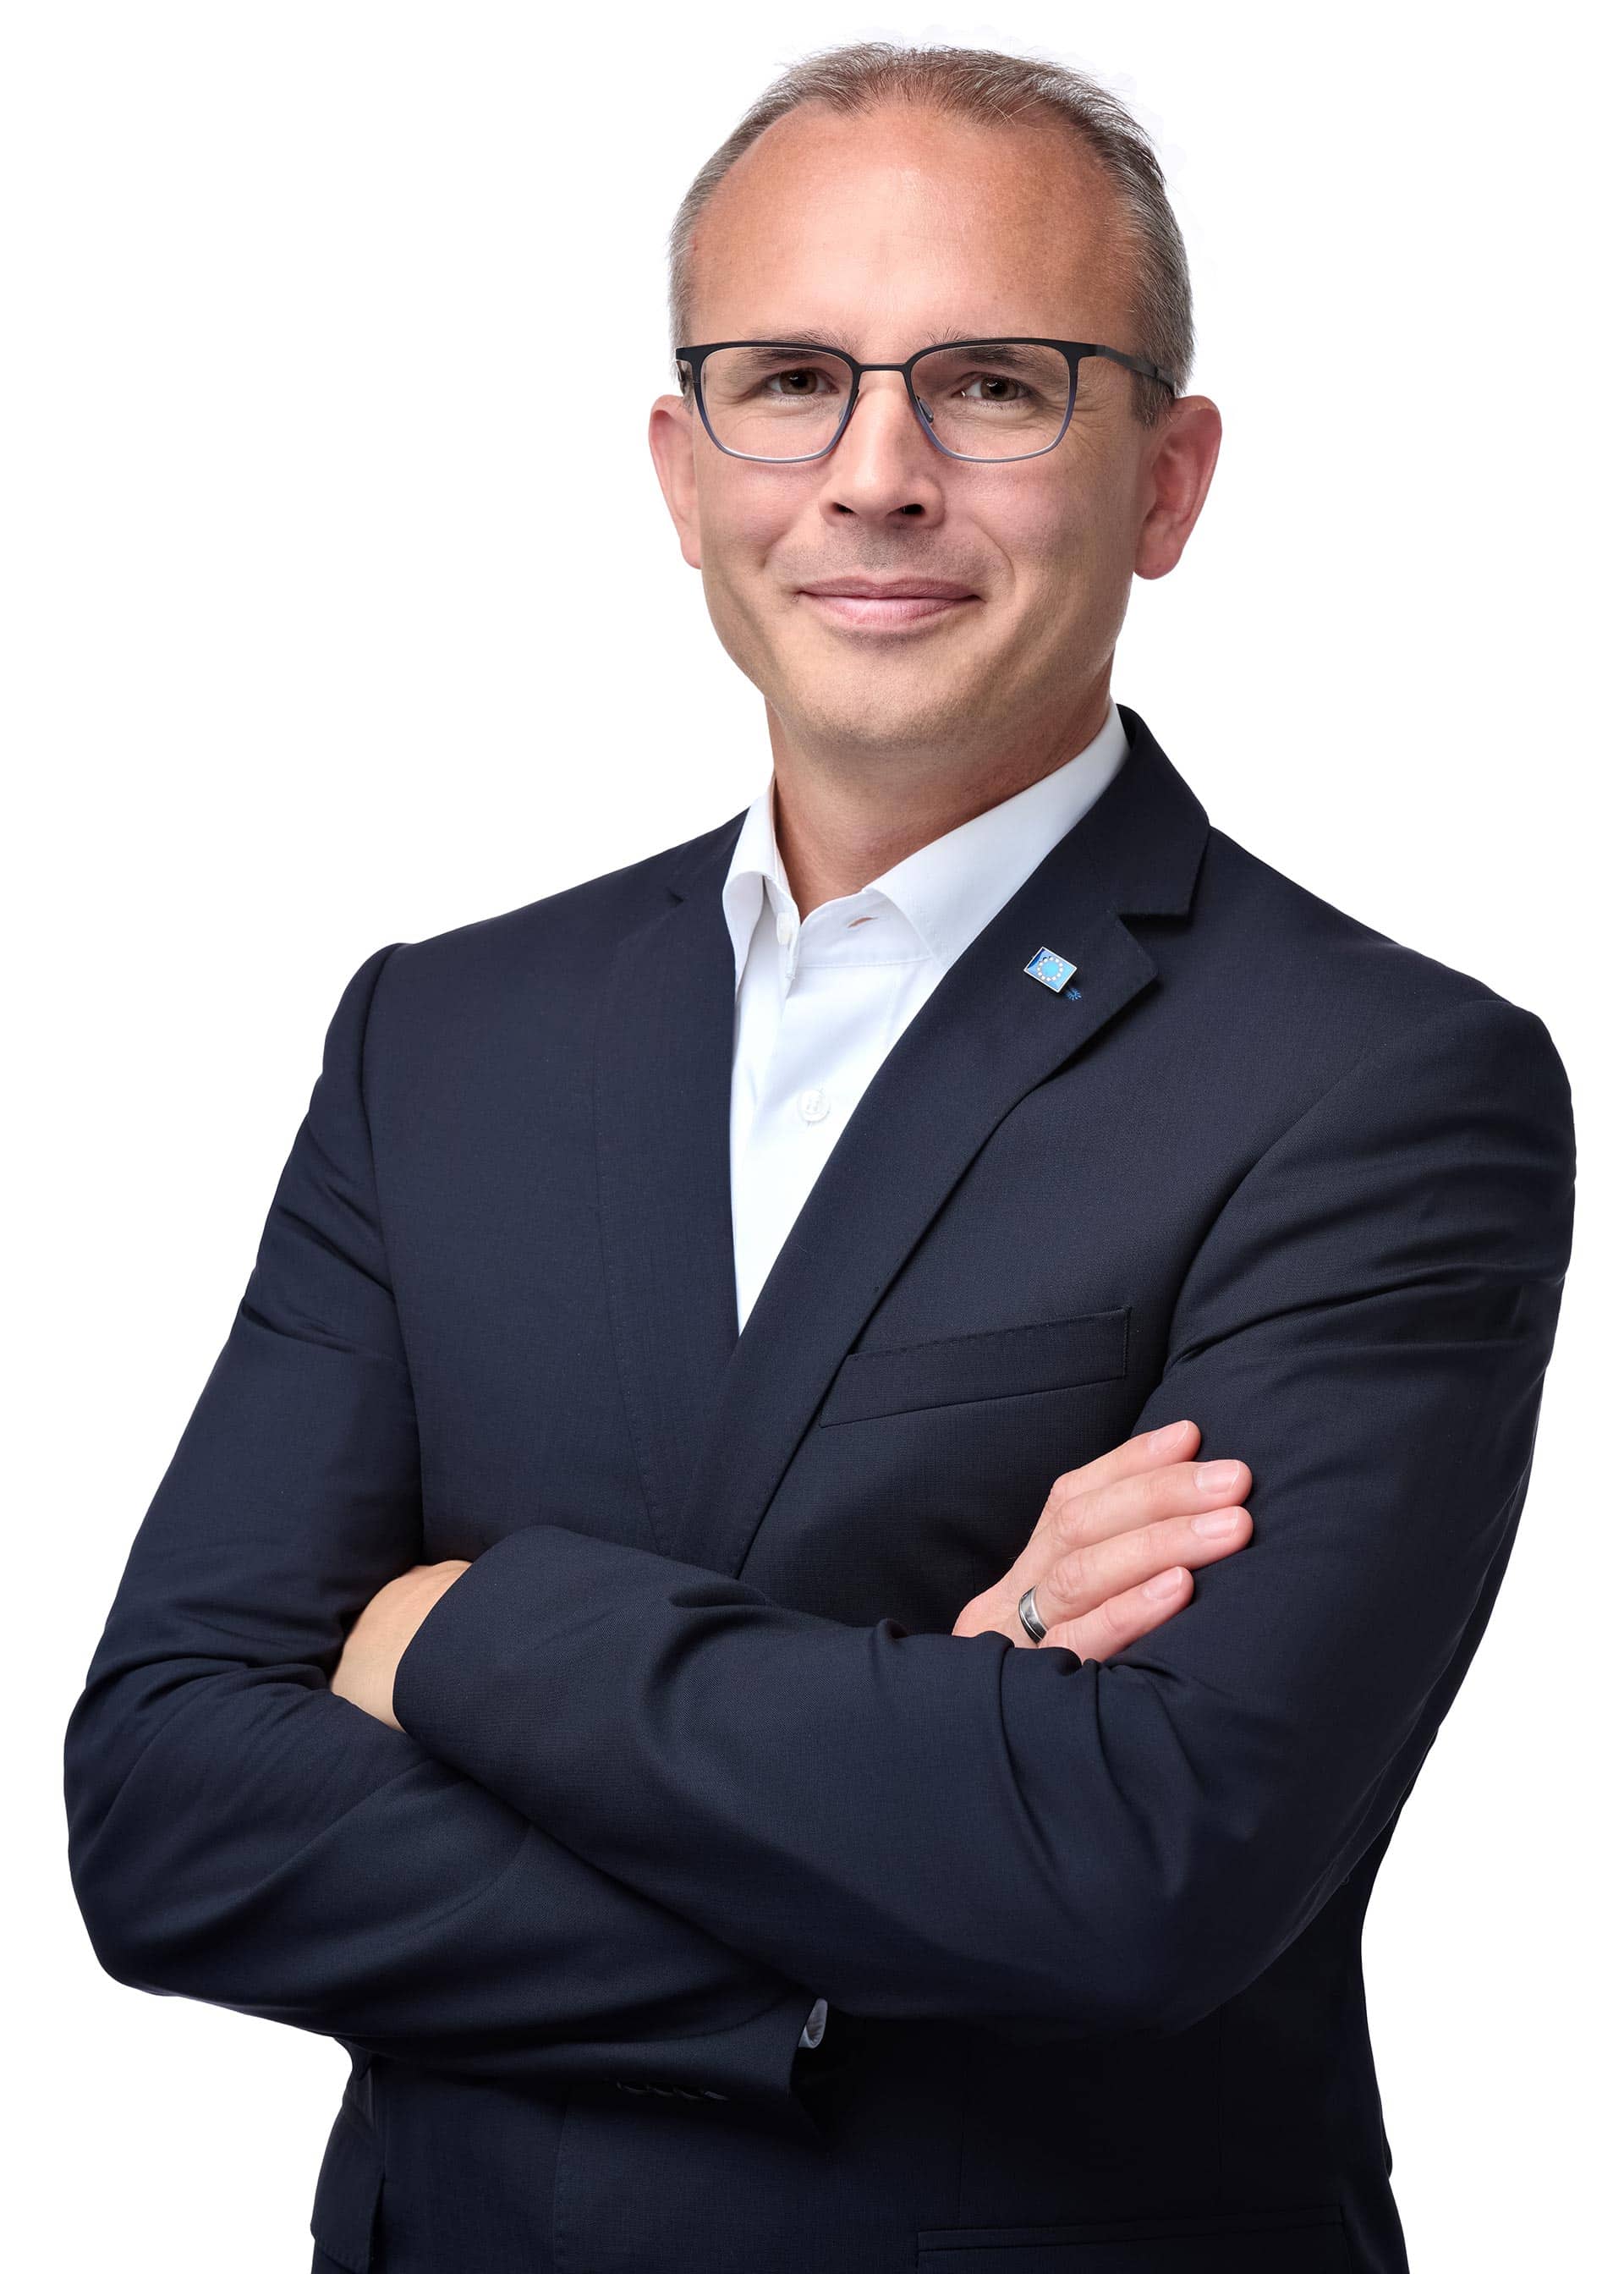 Wahlplakat des CSU Politikers Tobias Winkler